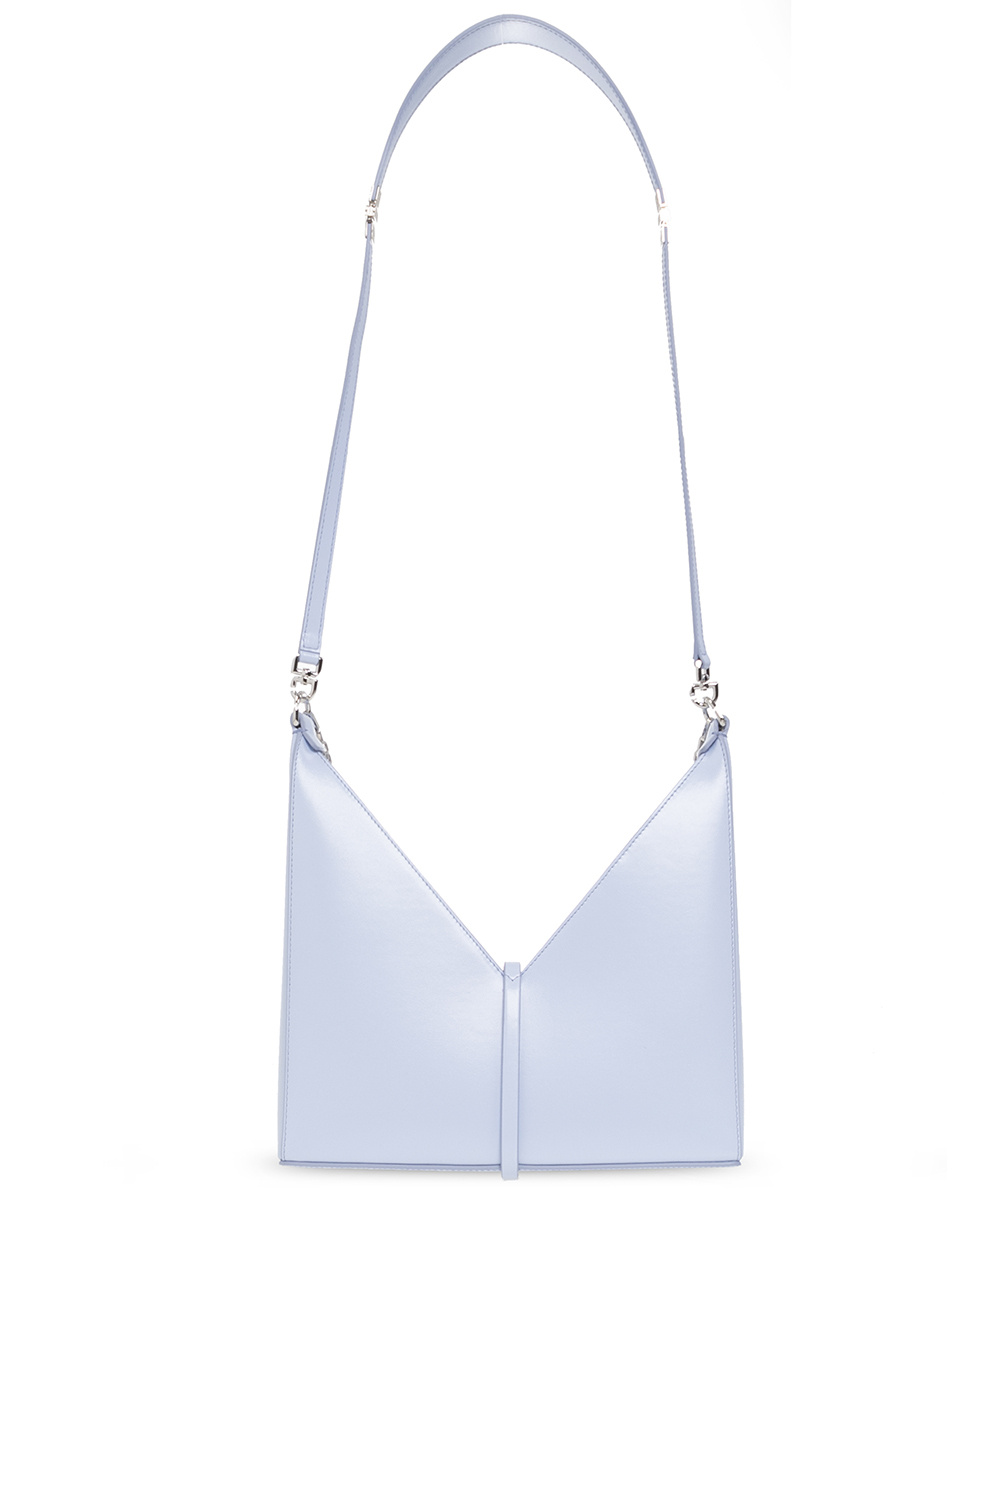 Givenchy ‘Cut Out S’ shoulder bag